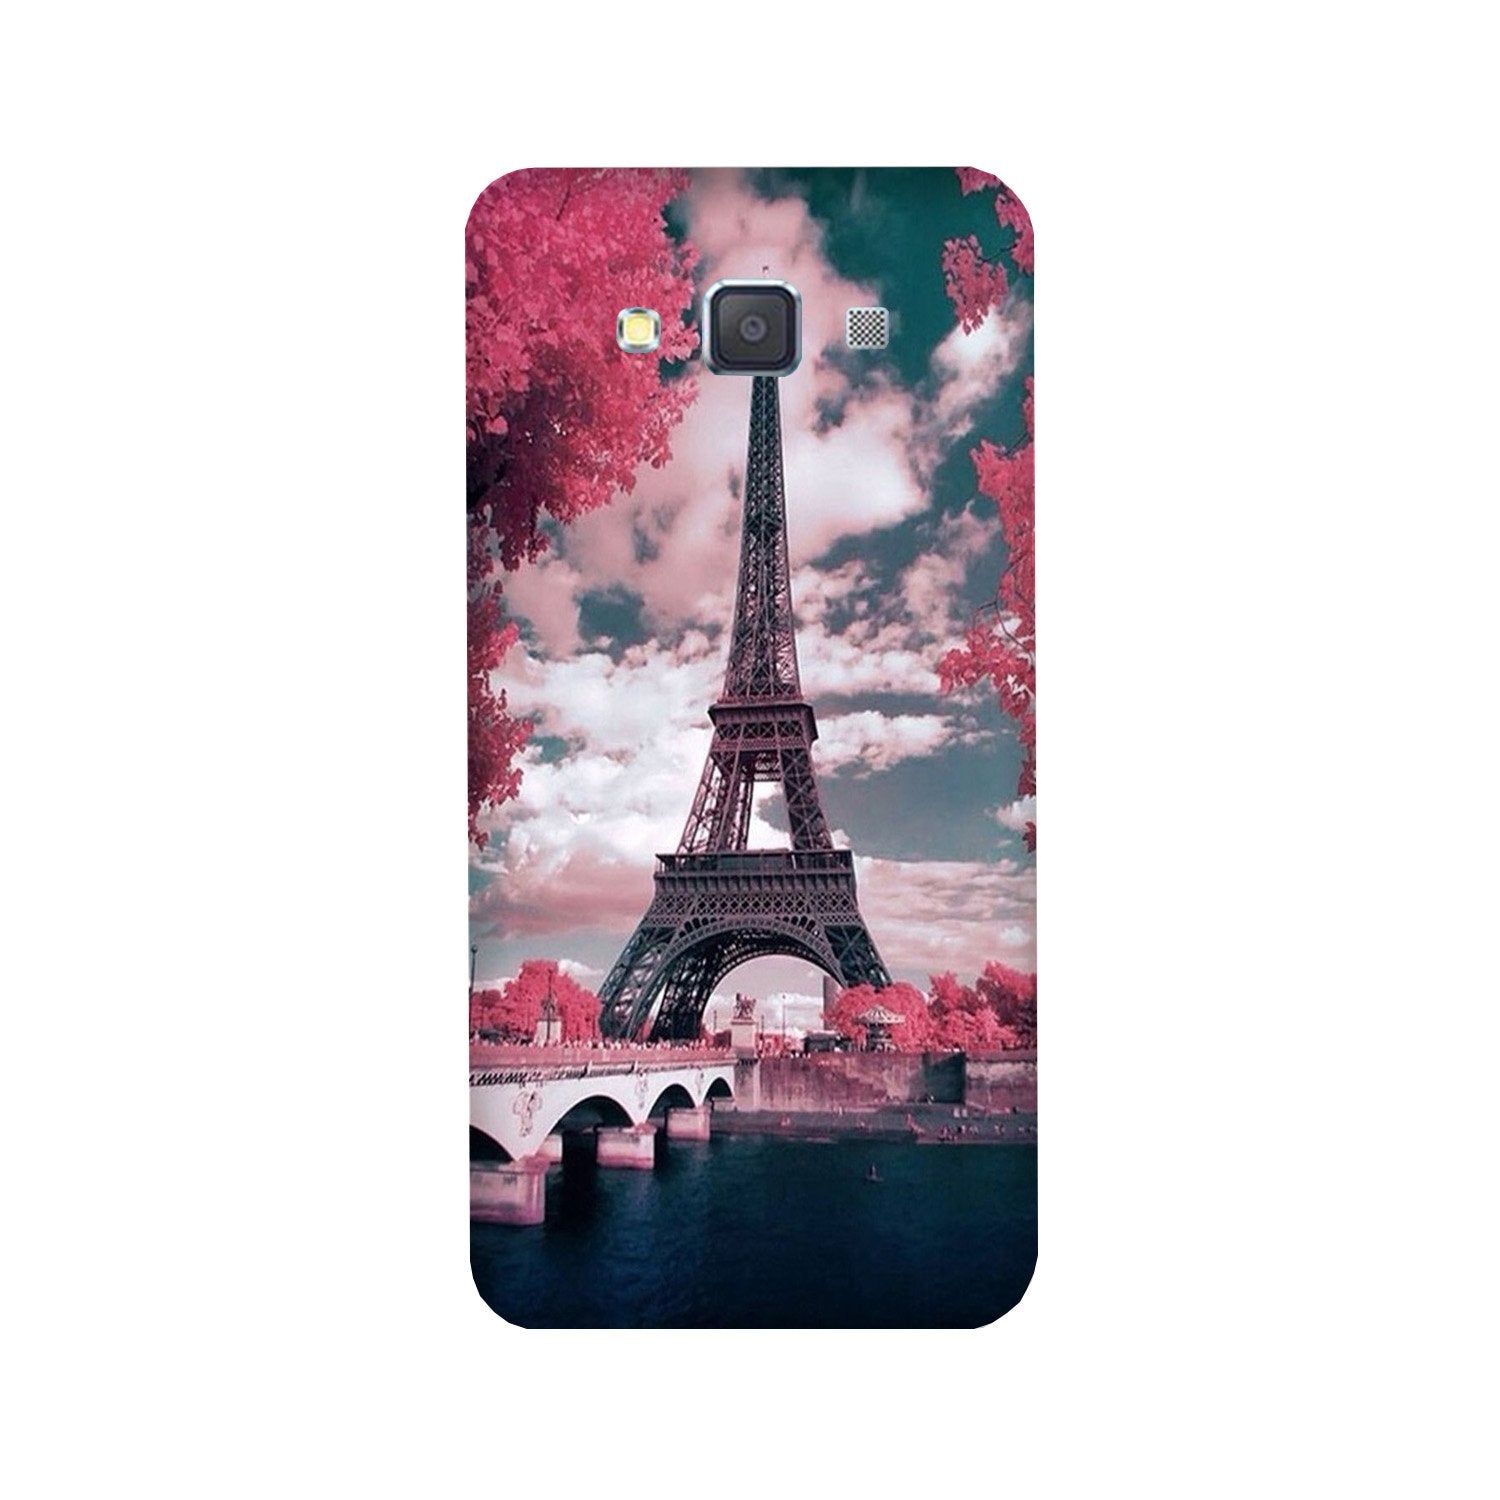 Eiffel Tower Case for Galaxy E5(Design - 101)